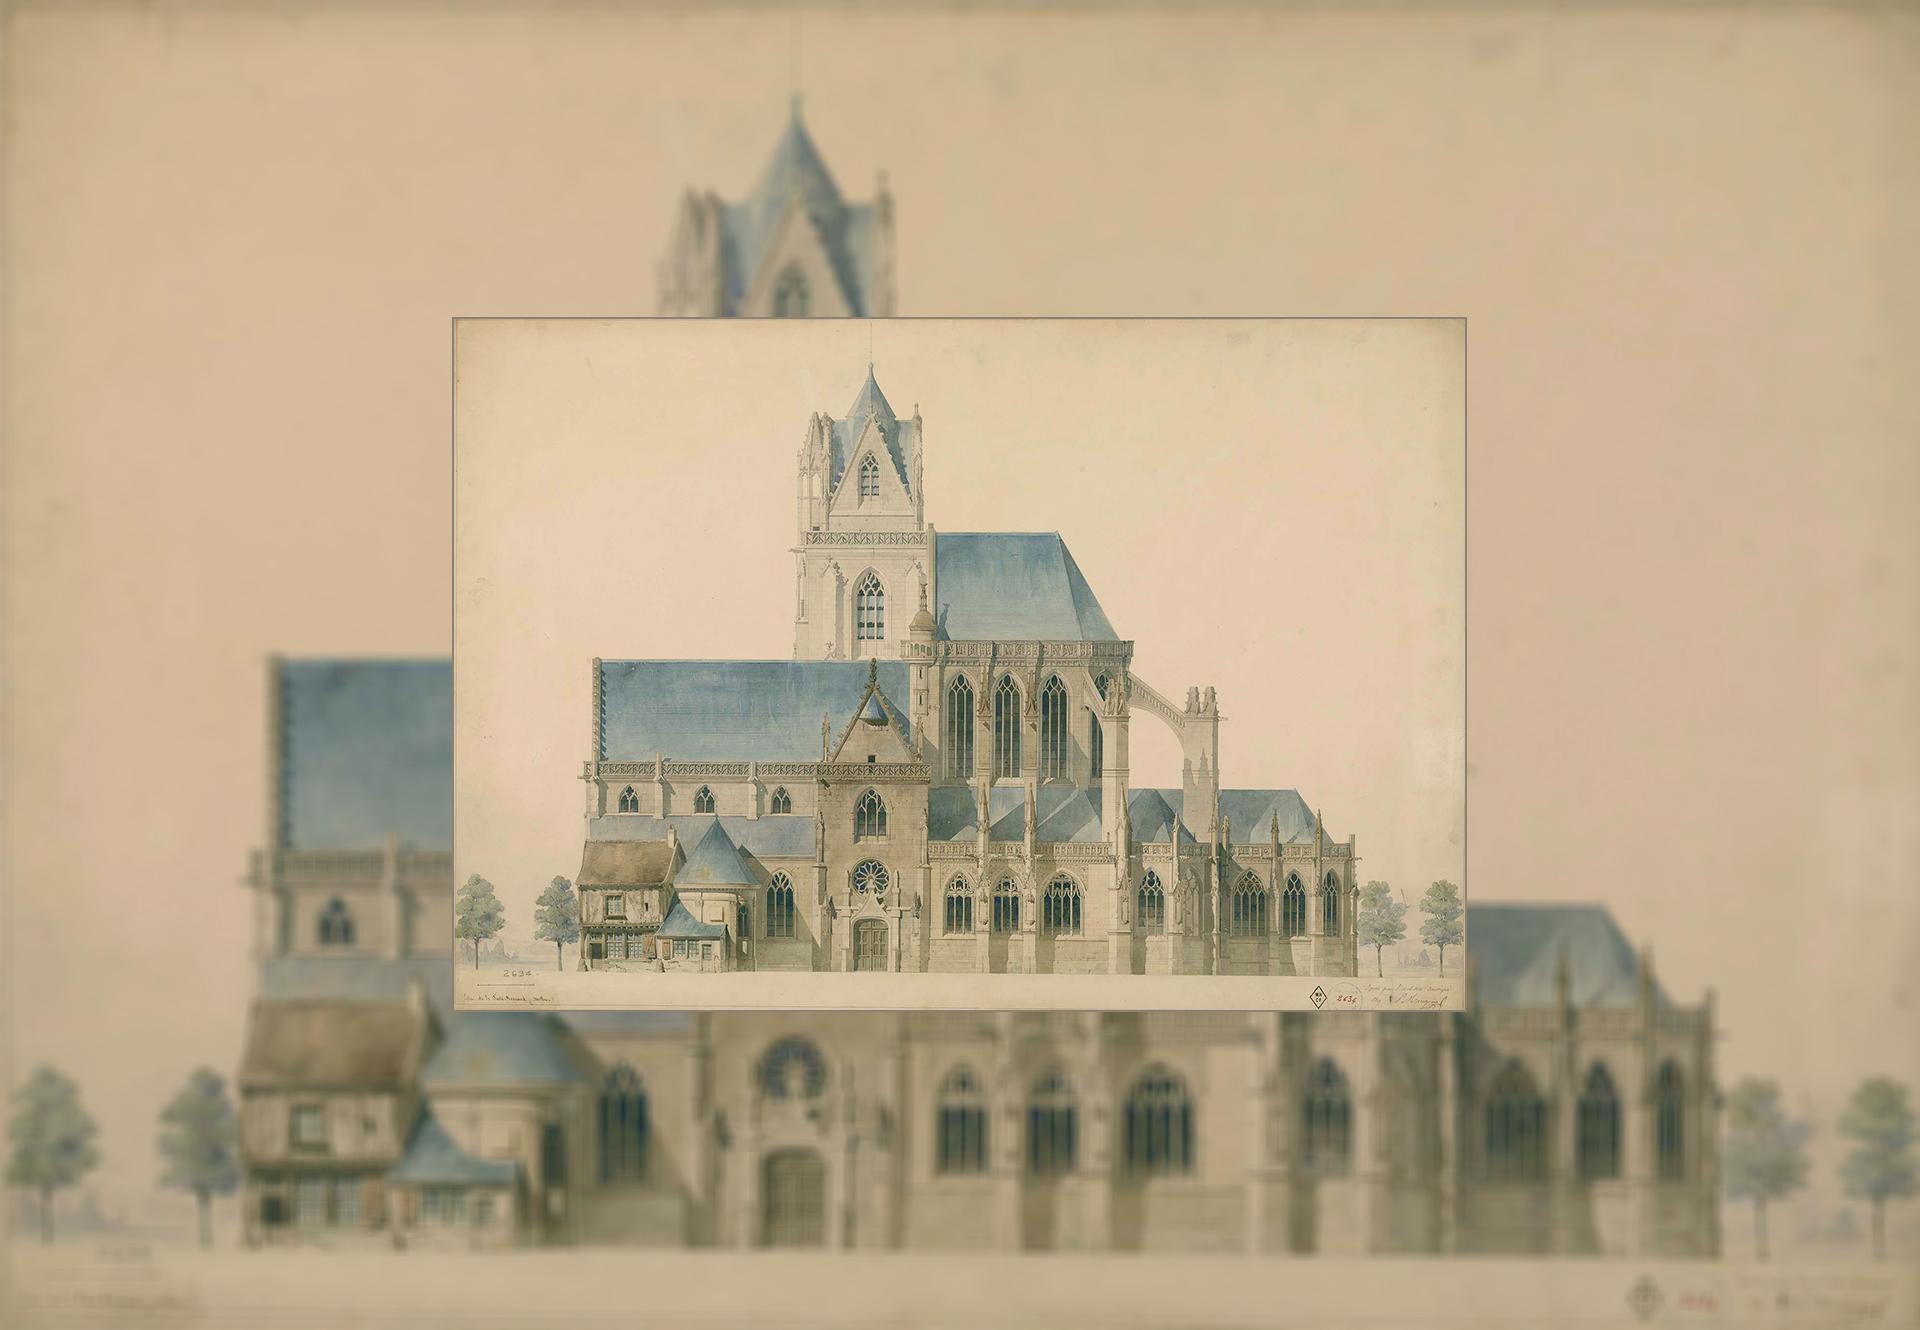 Élévation de la façade sud, église de la Ferté Bernard, Sarthe, Manguin